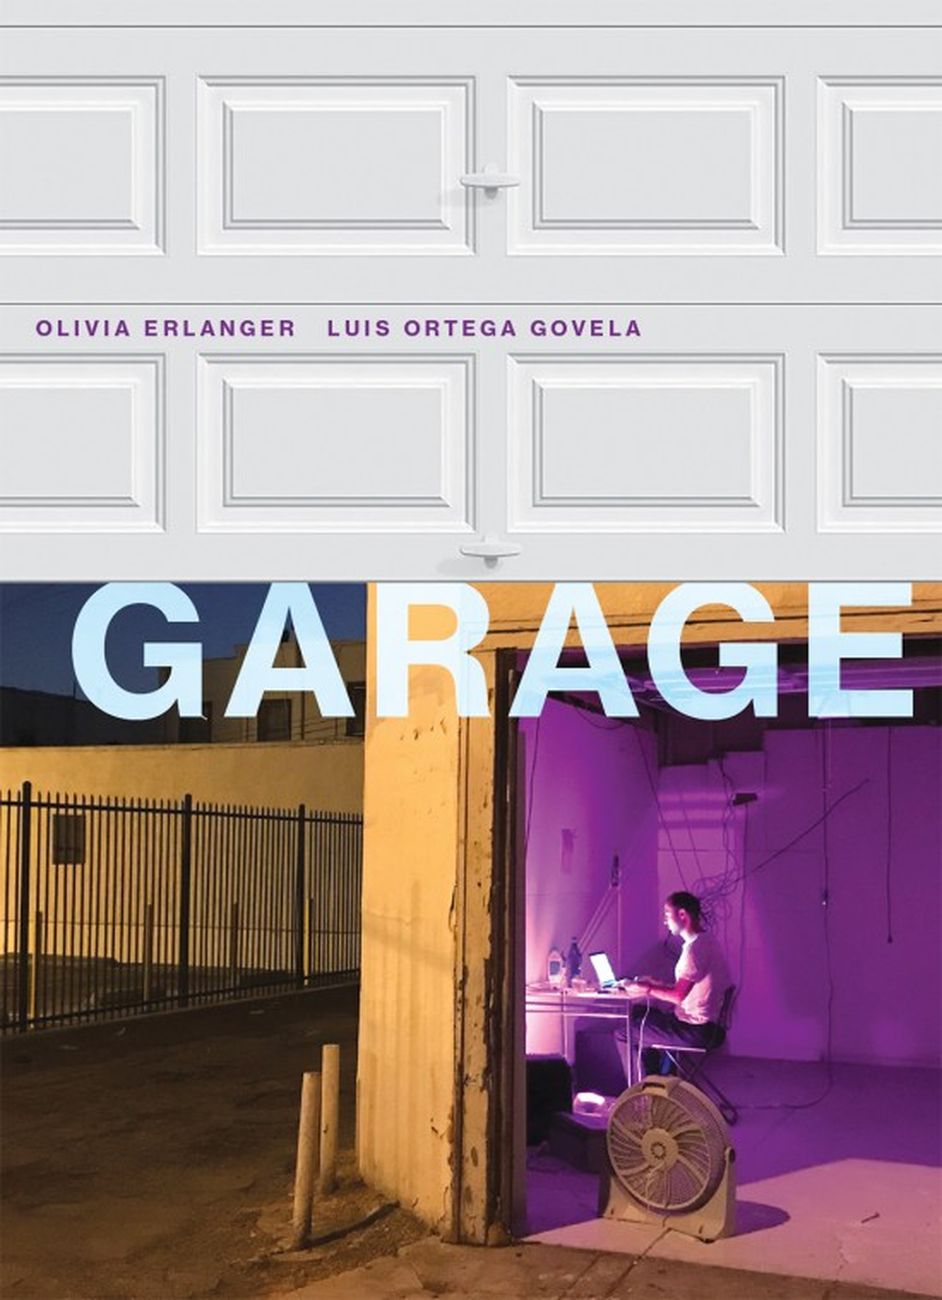 Olivia Erlanger & Luis Ortega Govela ‒ Garage (The Mit Press, Cambridge (Mass.) 2018). Cover